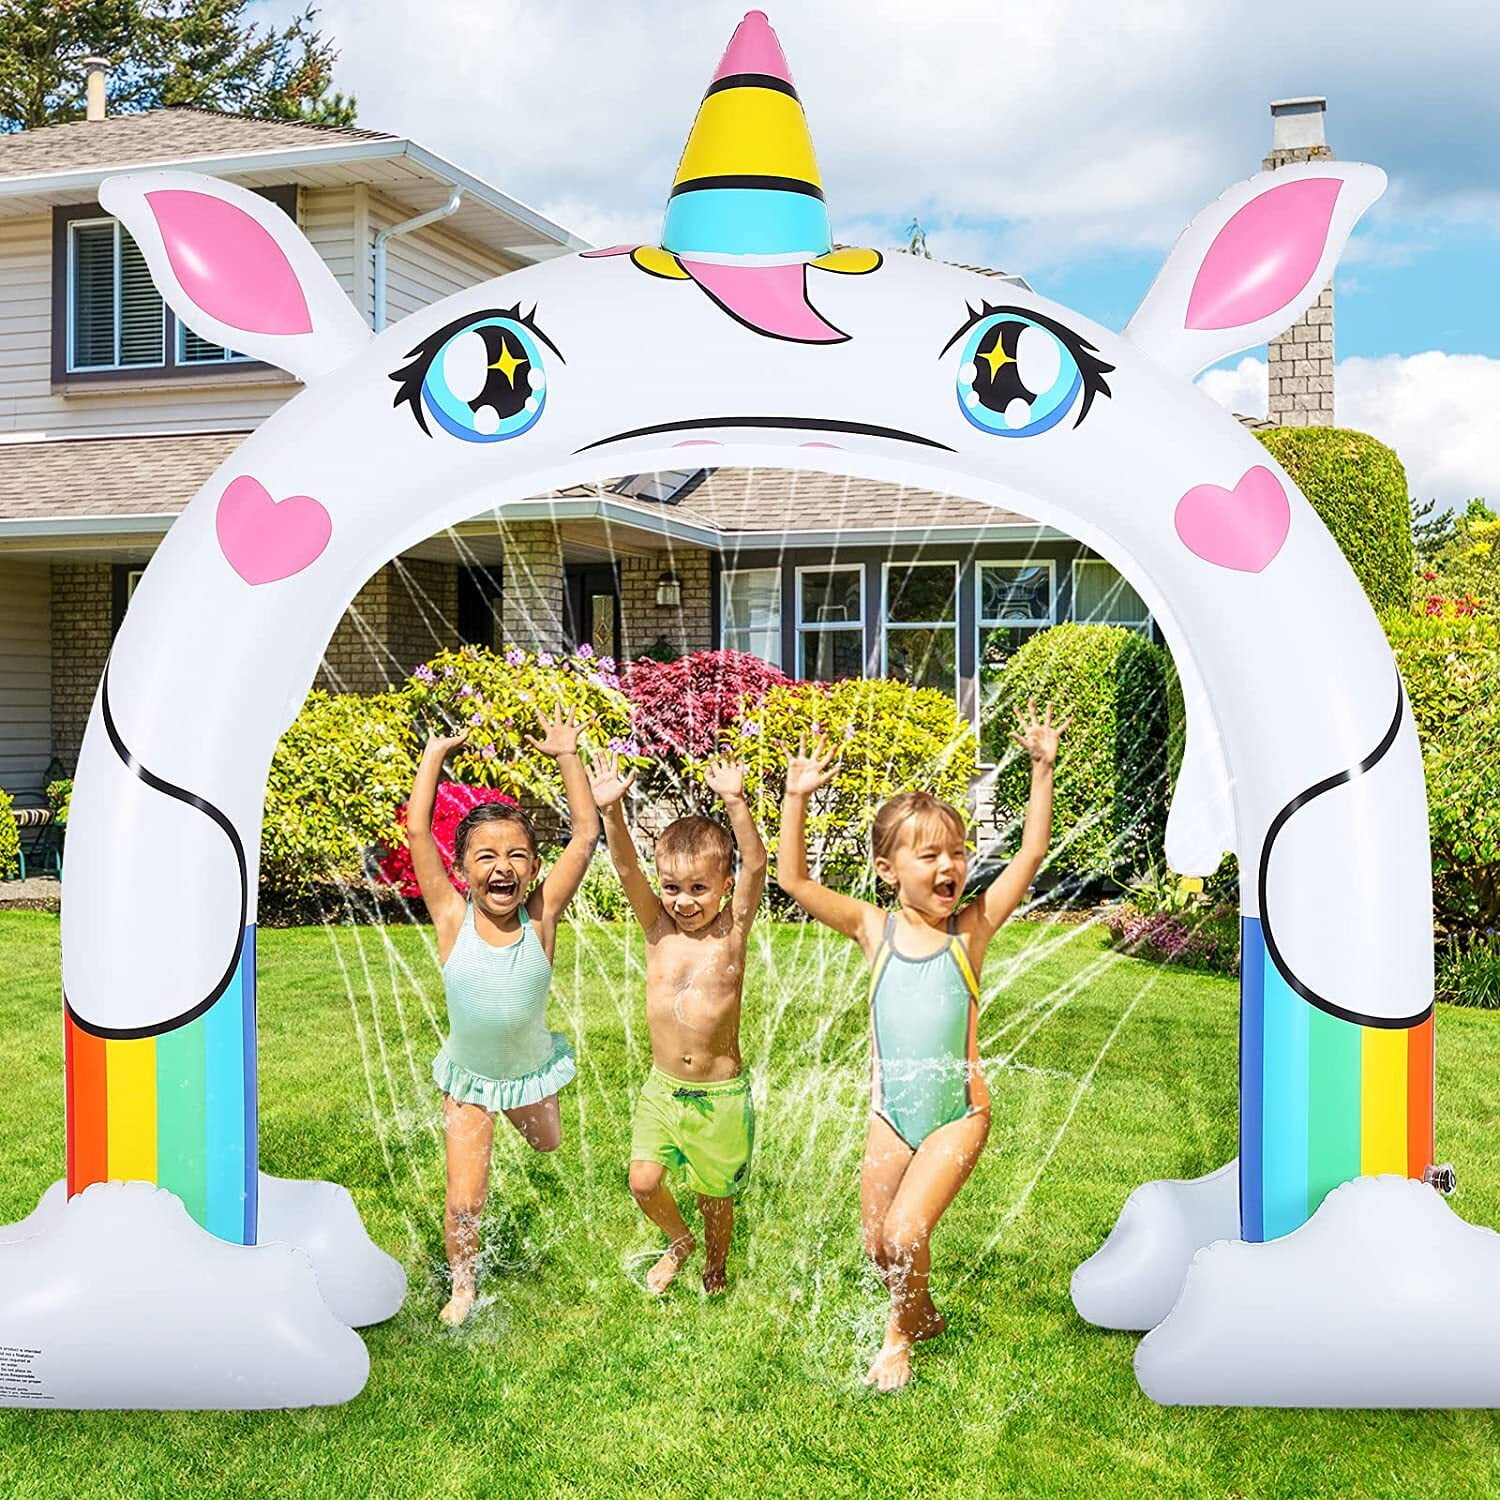 Giant Inflatable Unicorn Sprinkler Garden Fun Kids Toy Water Sprayer 6ft Tall Mi 